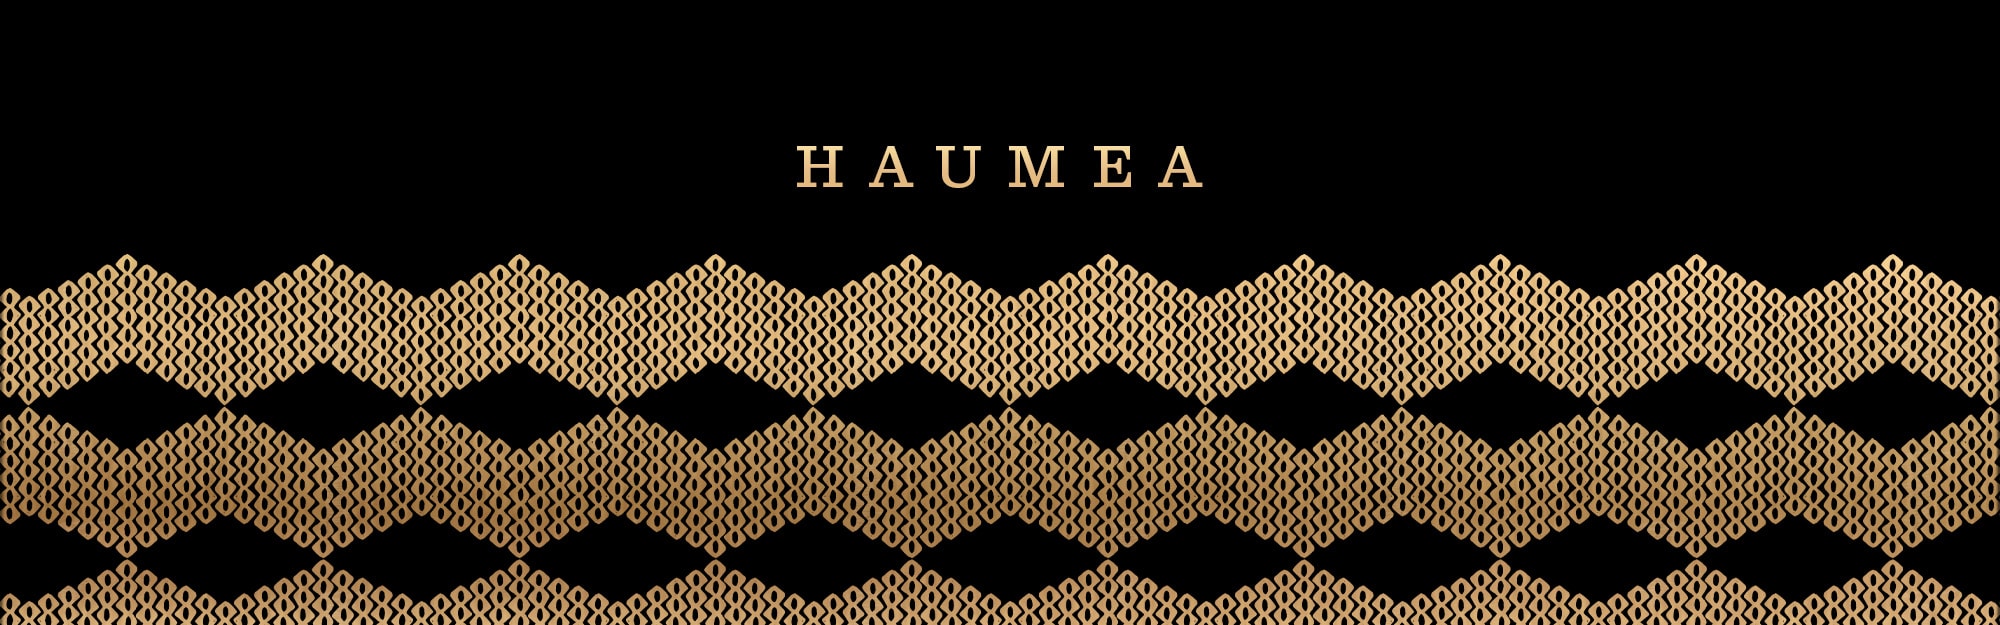 Haumea Prints Banner